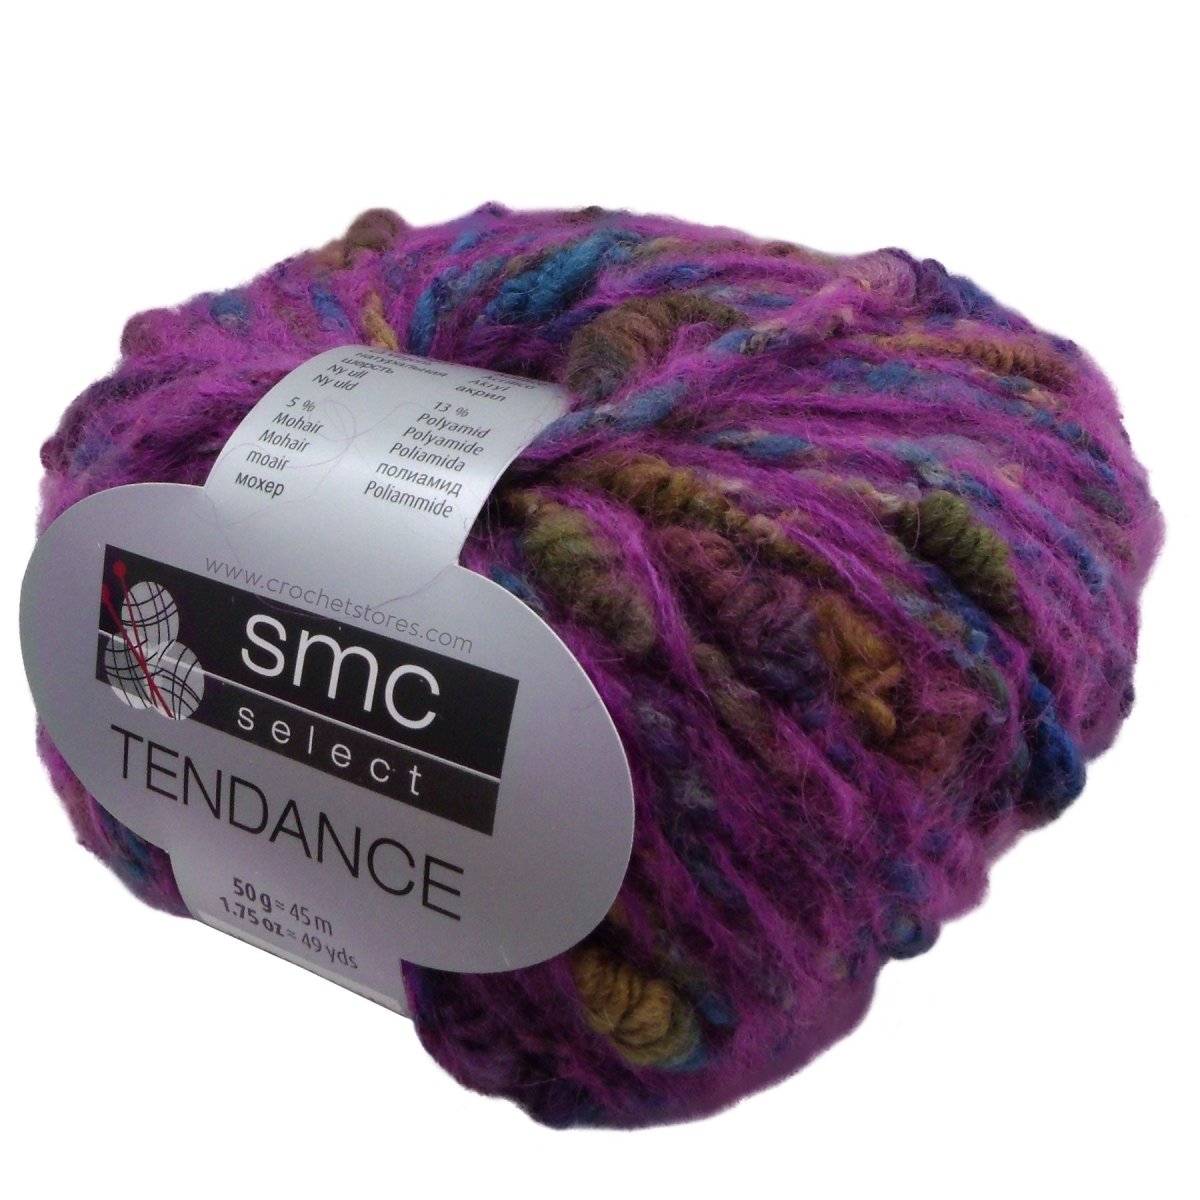 TENDANCE - Crochetstores9811763-83064082700933860